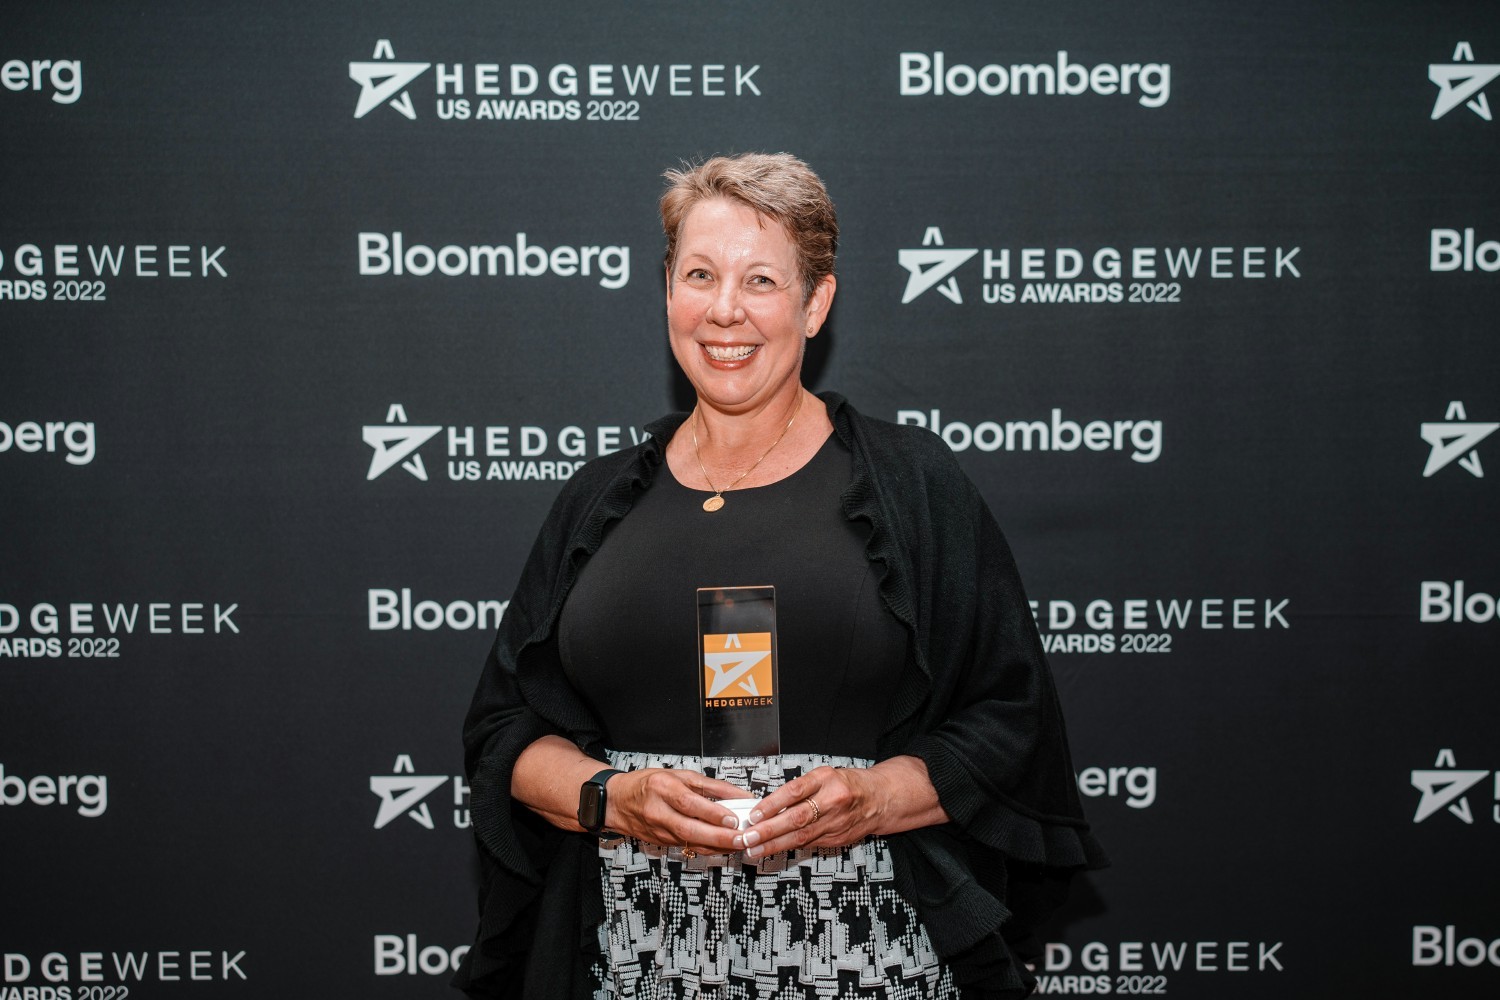 Hedgeweek US Awards 2022